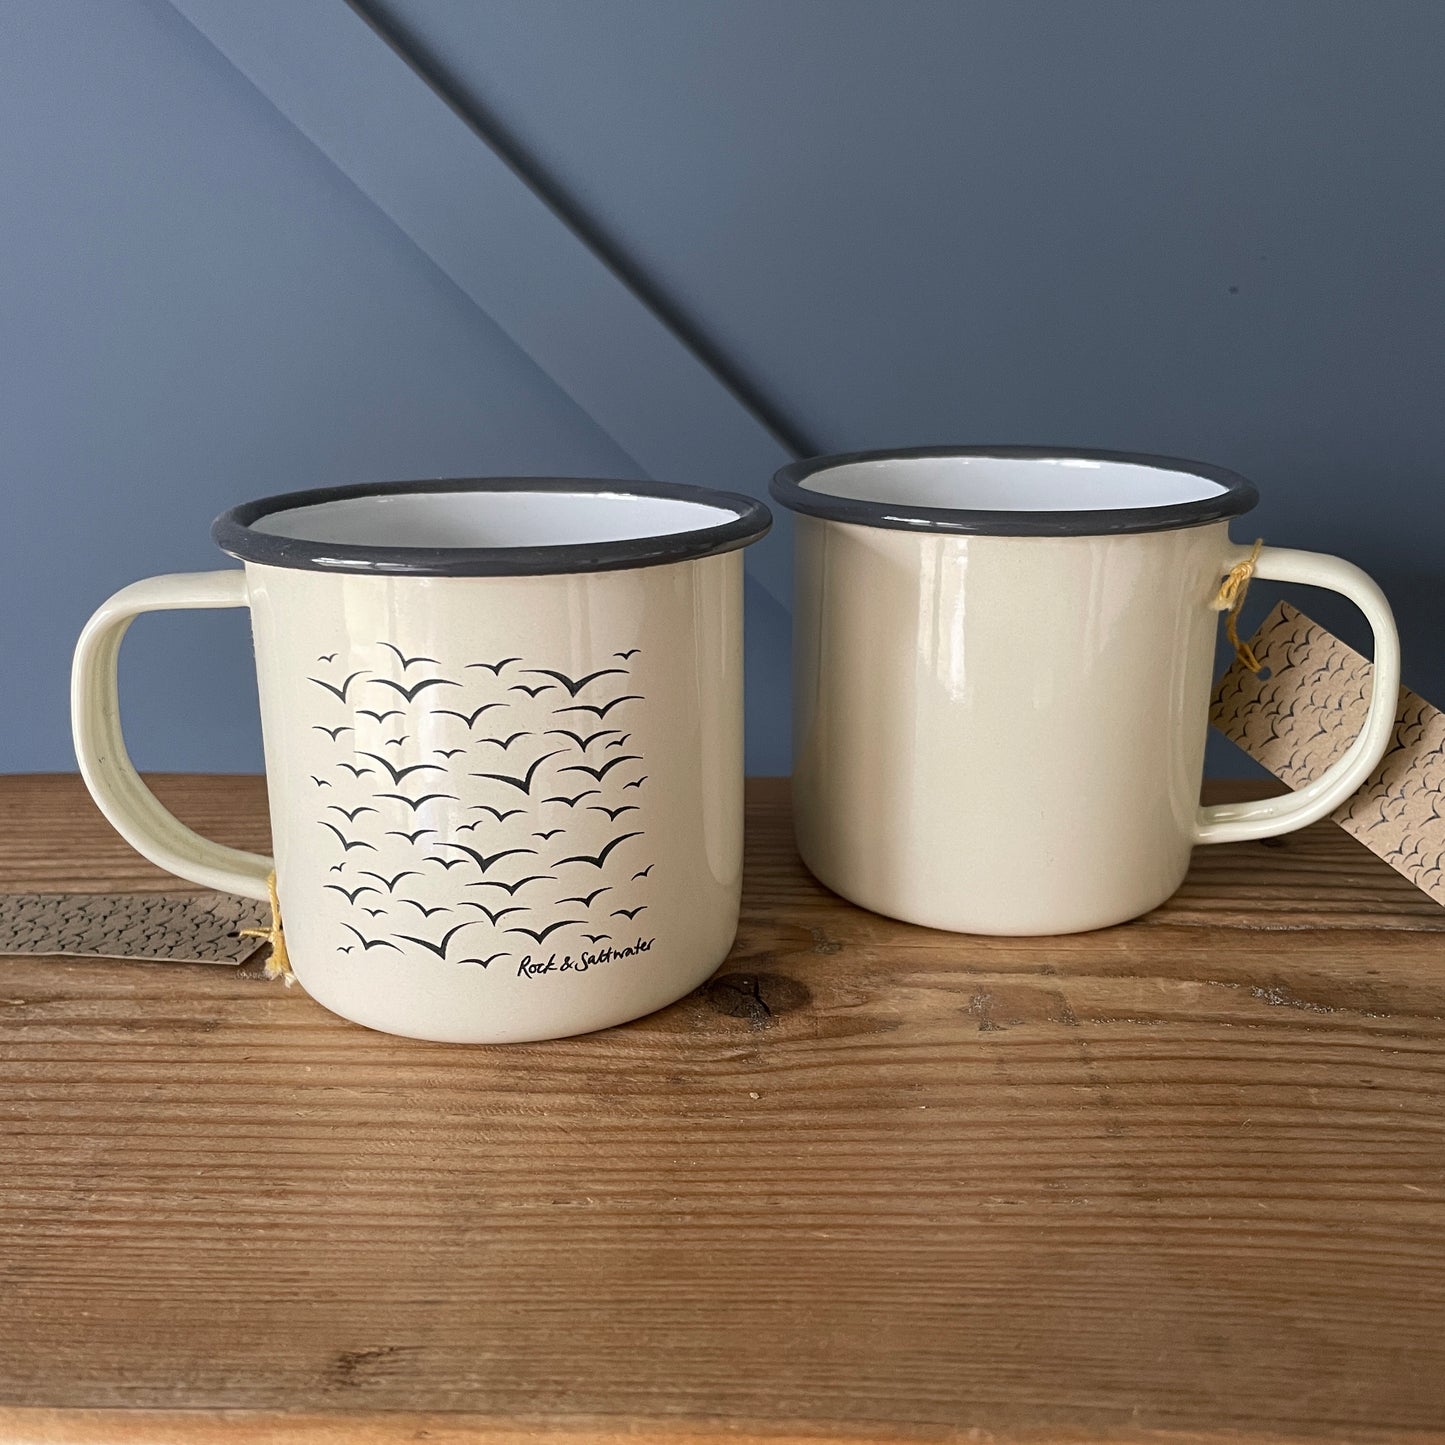 Cream and grey enamel mugs